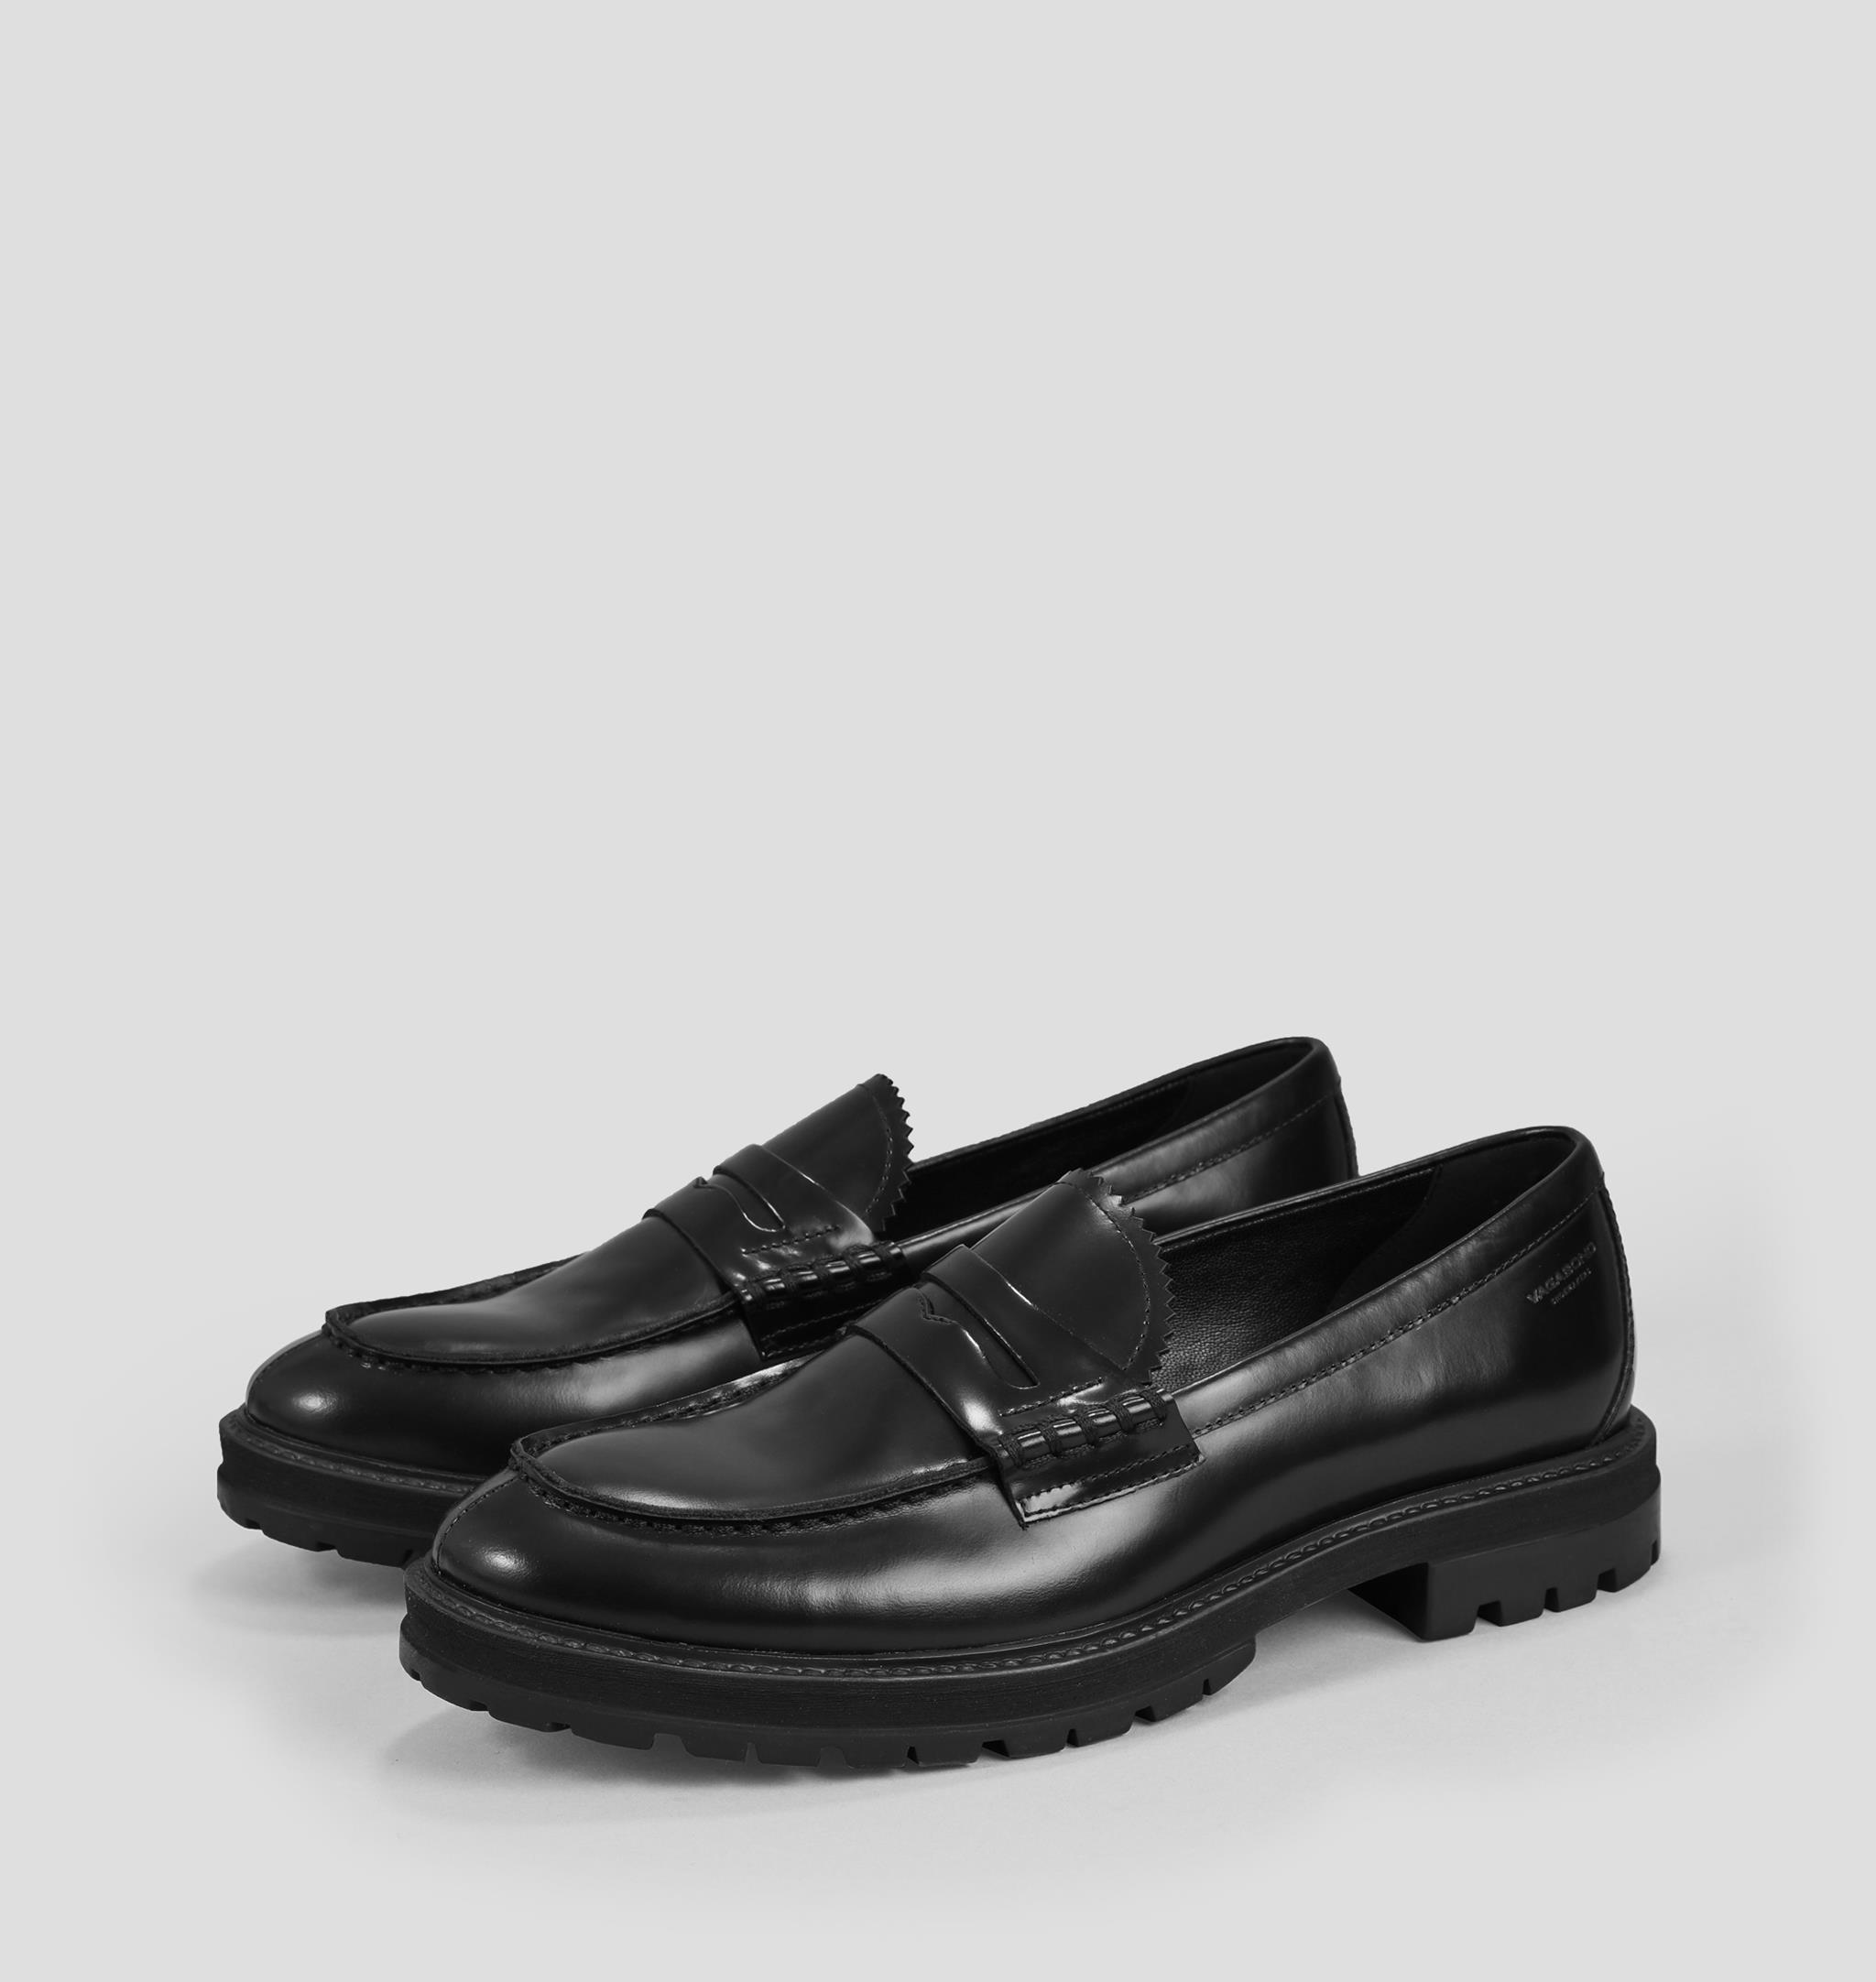 Johnny Polished leather Shoes - Black - Vagabond